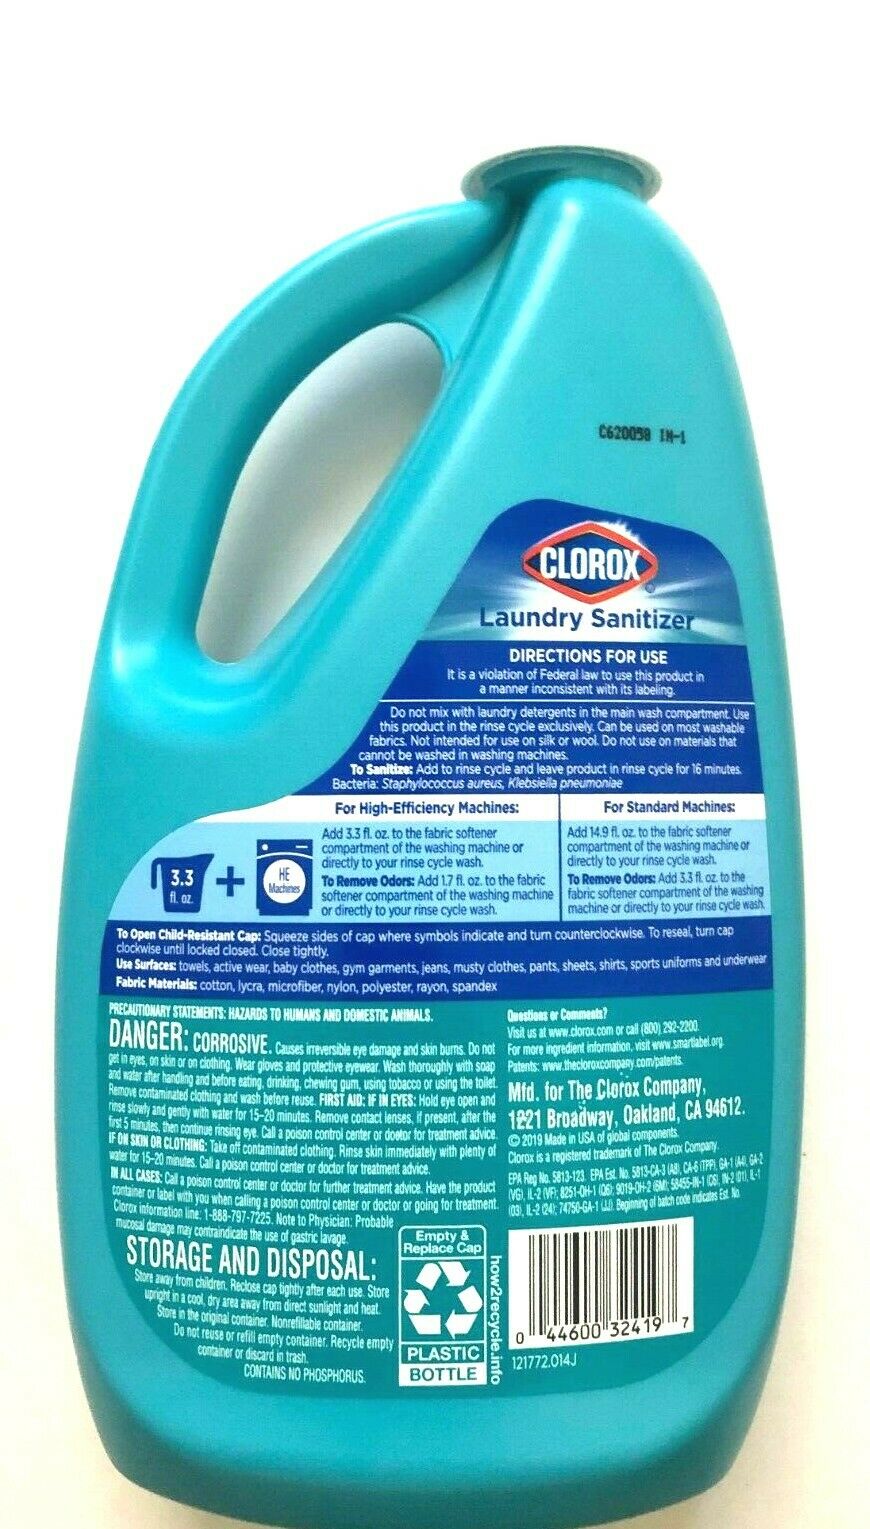 Clorox Laundry Sanitizer 42 fl oz Kills 99.9% of Bacteria